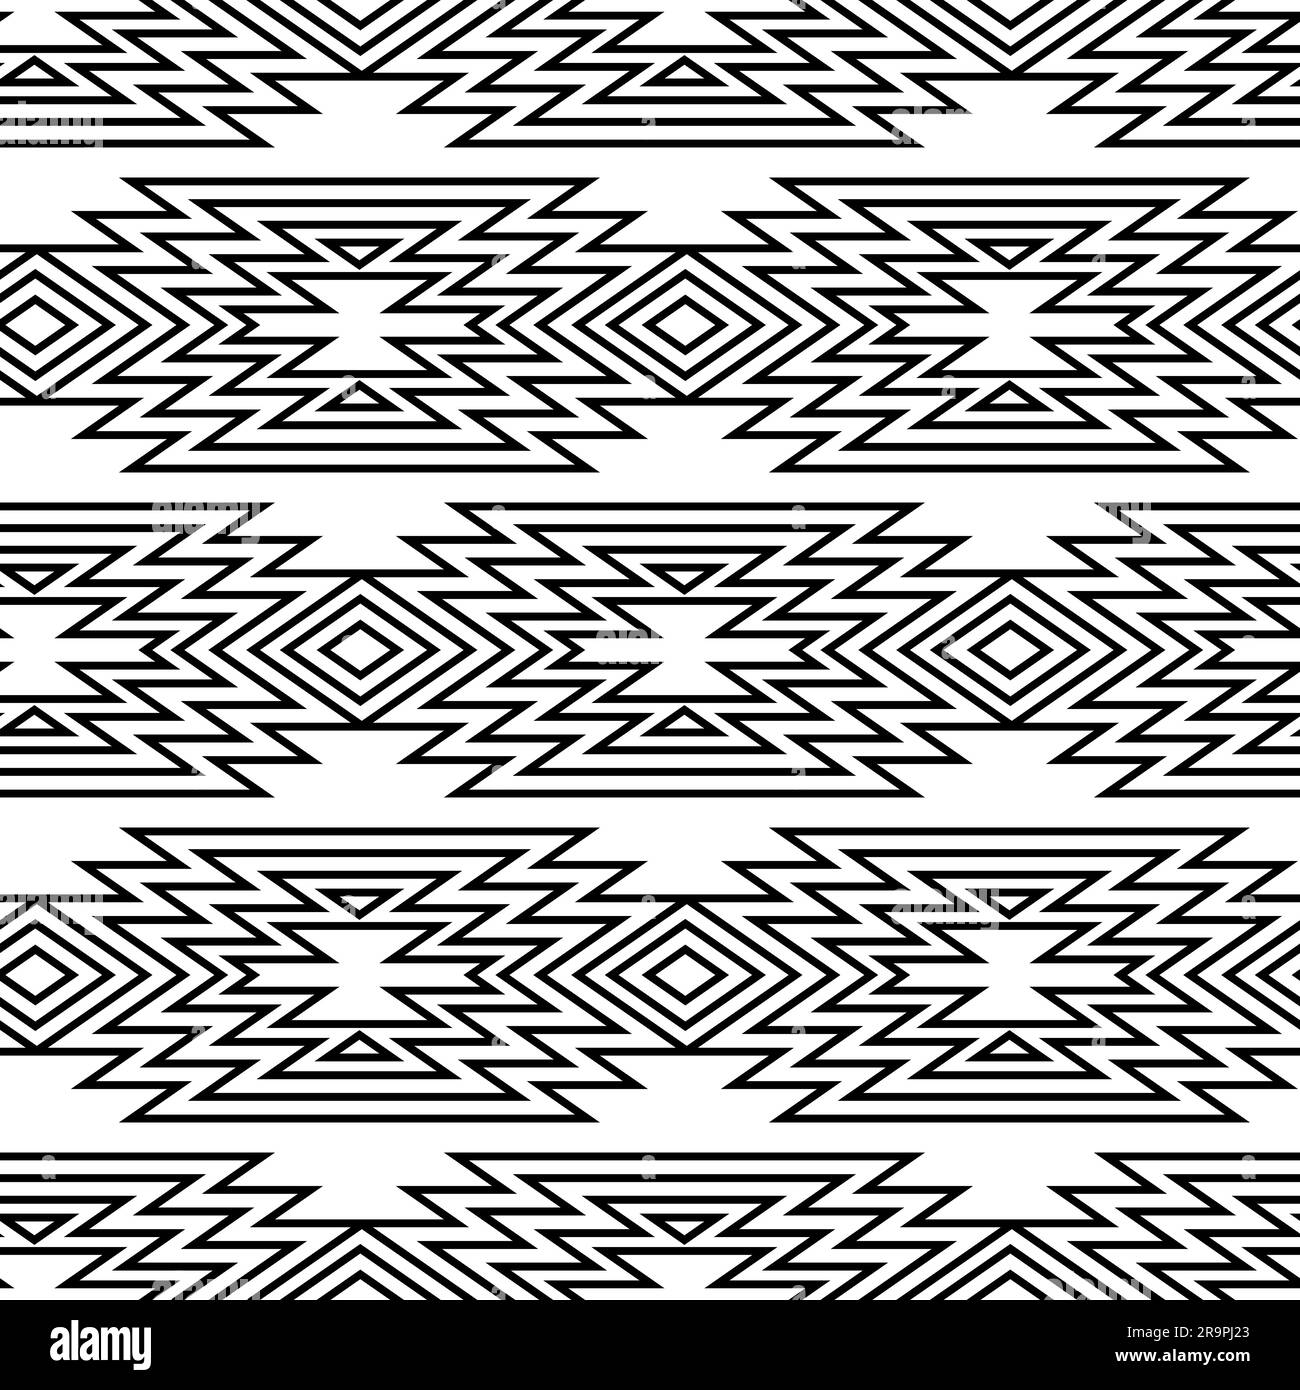 Vector trendy black and white seamless decorative ethnic pattern. Boho geometric style. Stock Vector